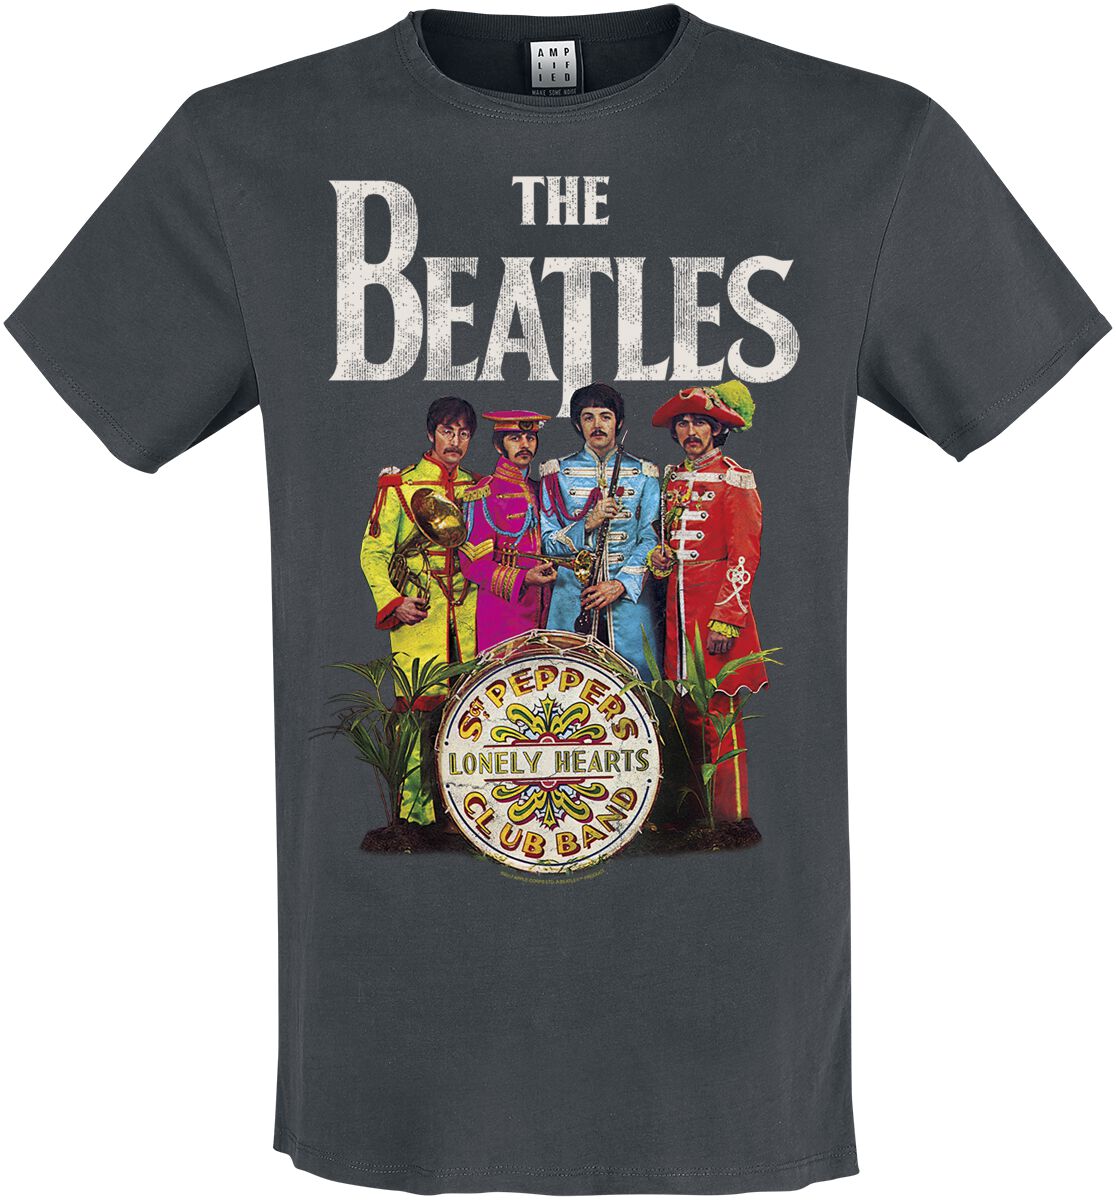 The Beatles T-Shirt - Amplified Collection - Lonely Hearts - M bis XXL - für Männer - Größe XXL - charcoal  - Lizenziertes Merchandise!